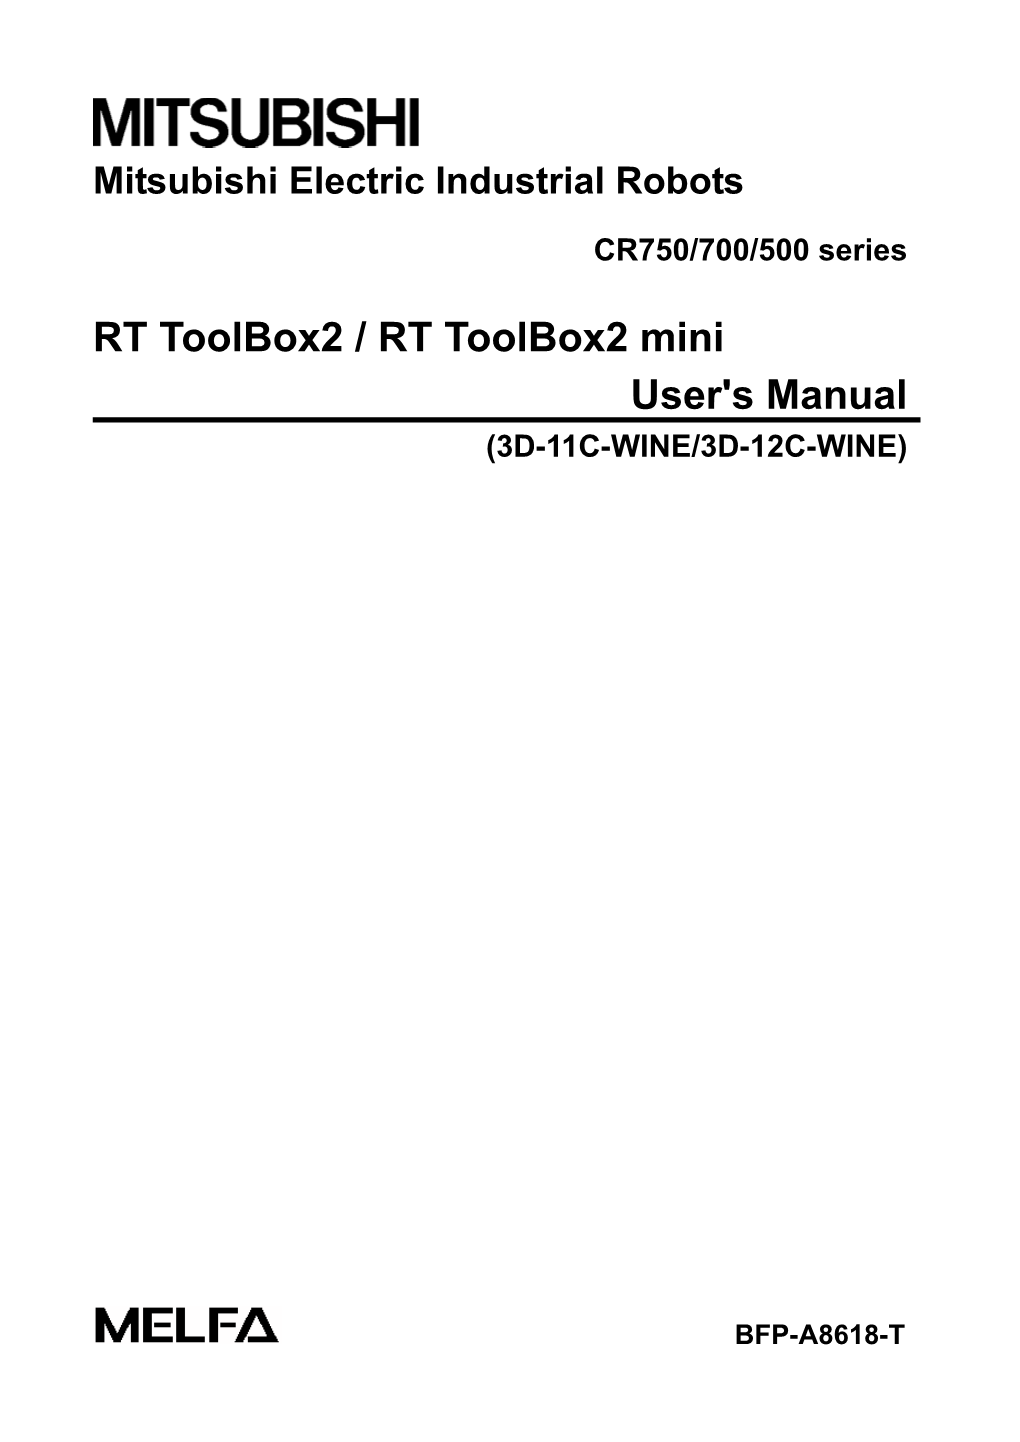 RT Toolbox2 Mini User's Manual (3D-11C-WINE/3D-12C-WINE)